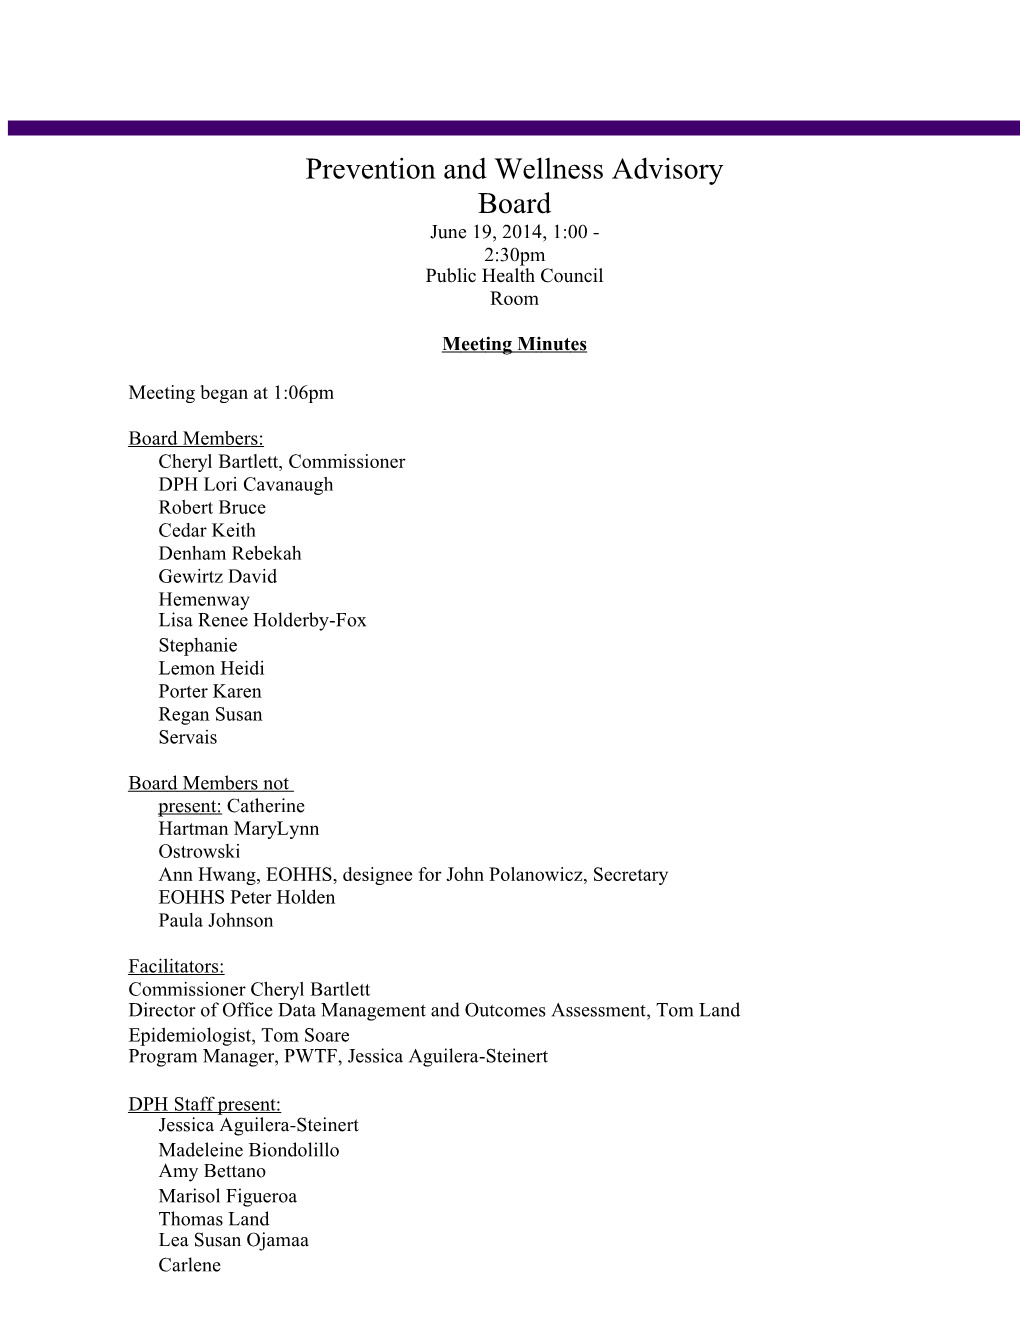 Prevention and Wellness Advisory Board